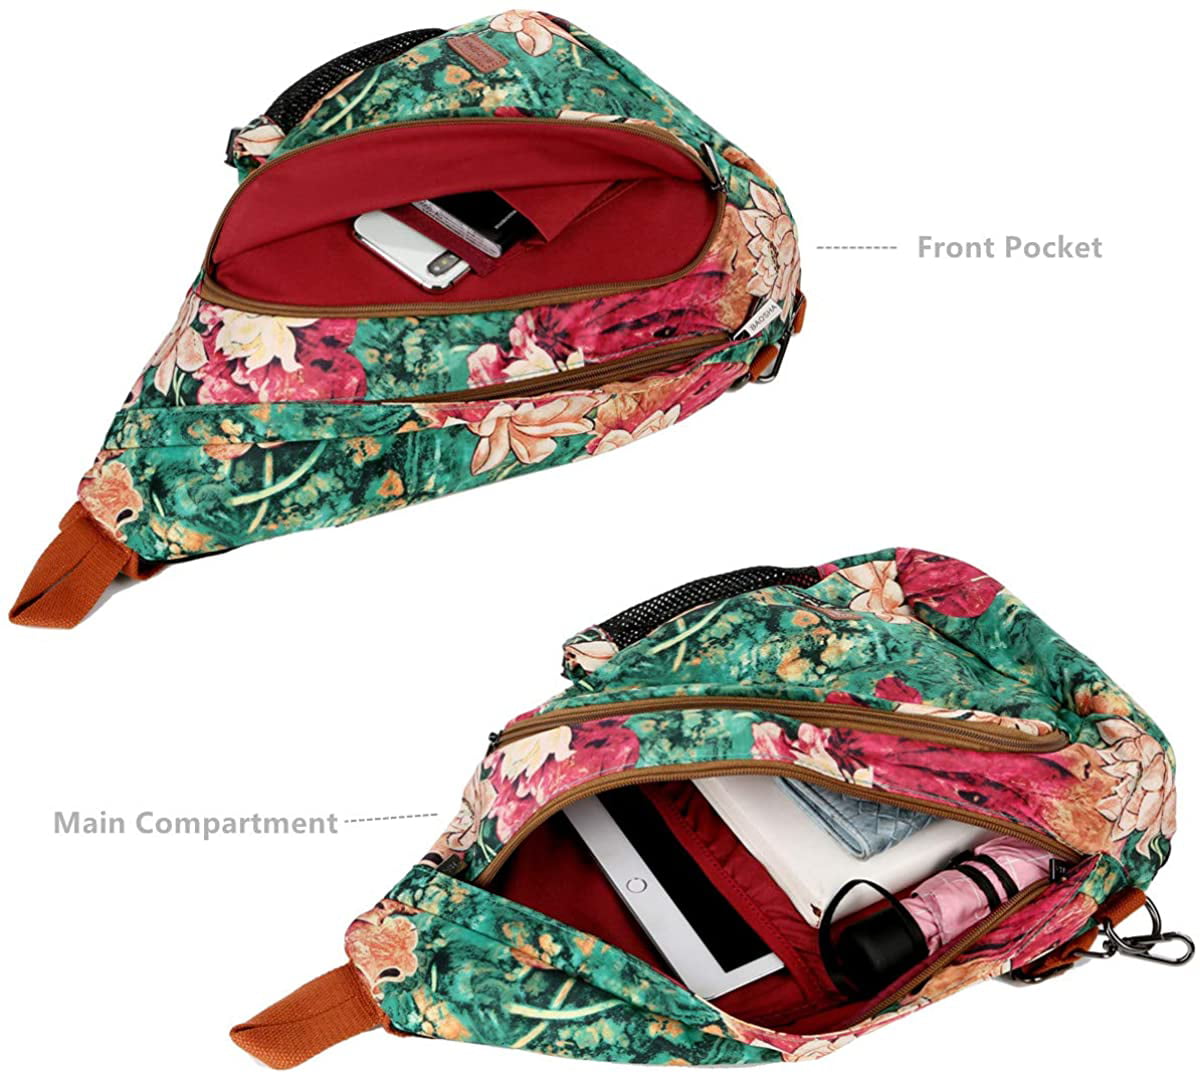 BAOSHA Sling backpack Crossbody Shoulder Chest Bag Travel Hiking Daypack for Women XB-04 